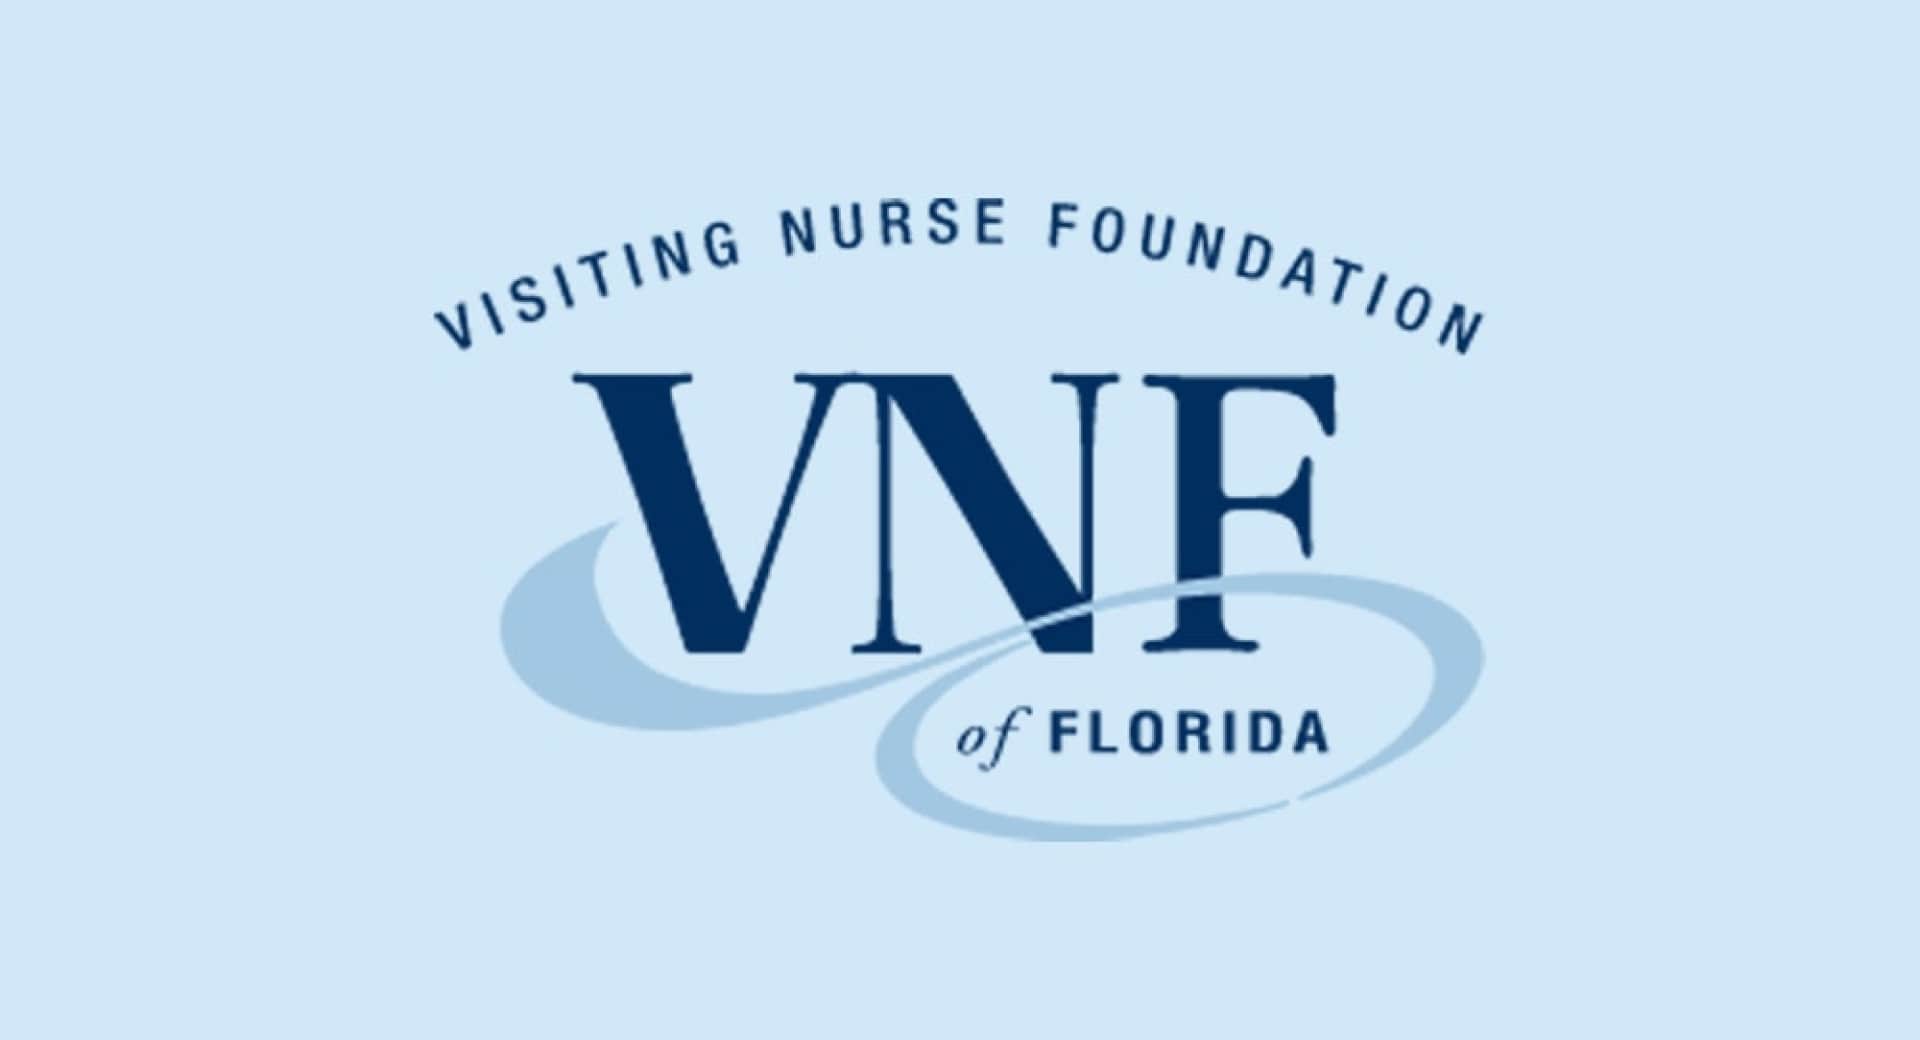 VNA employees donate to needy families